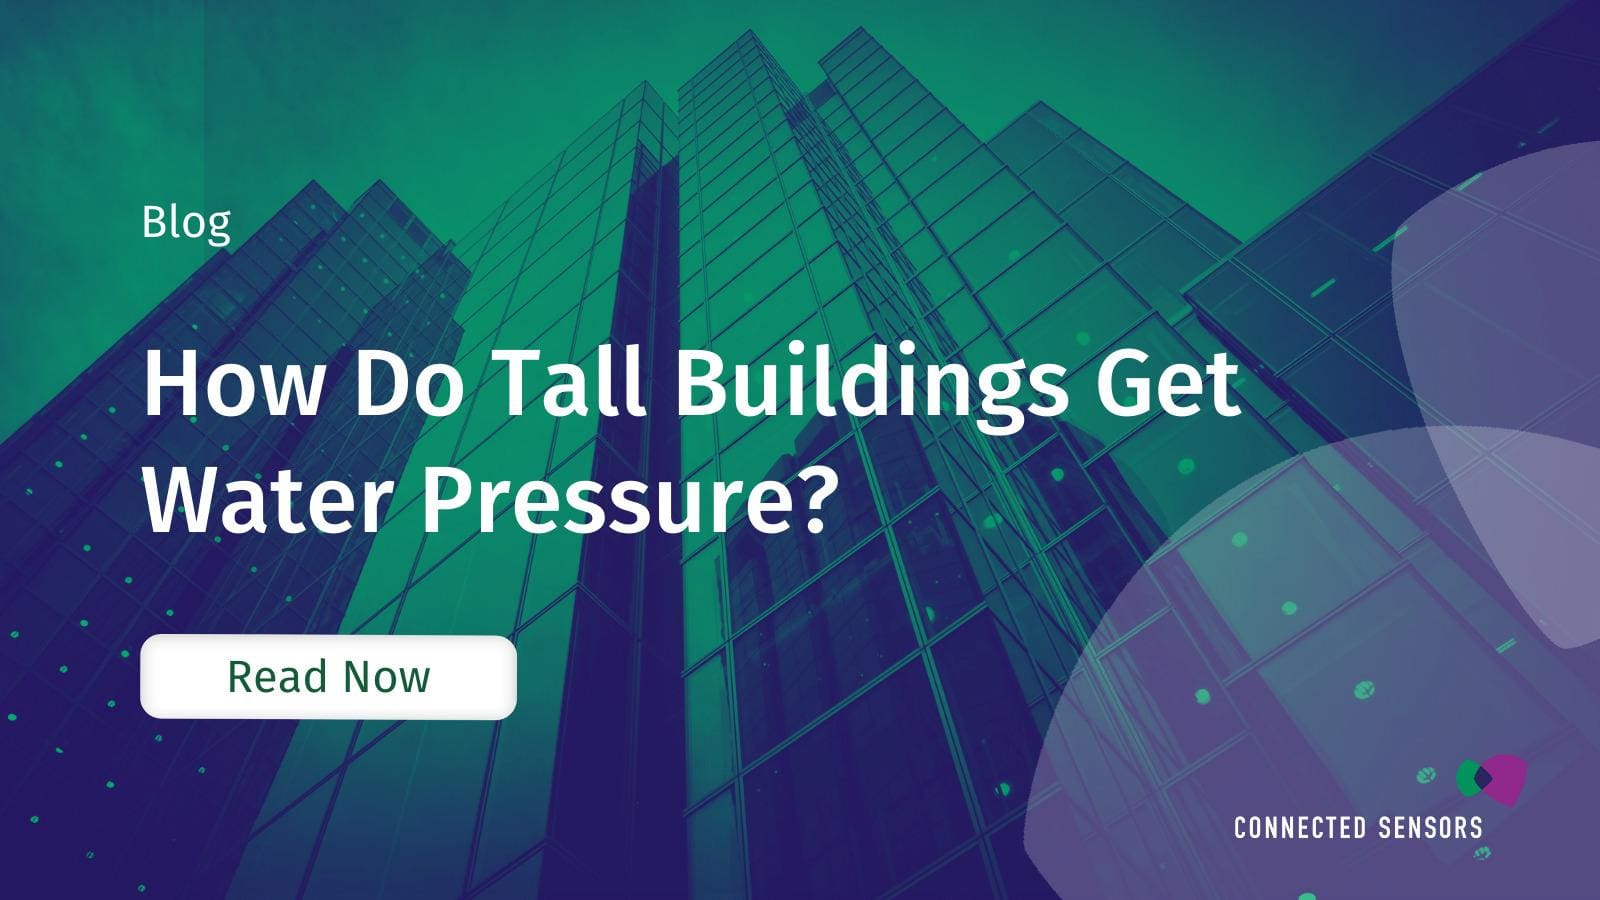 How tall buildings get water pressure